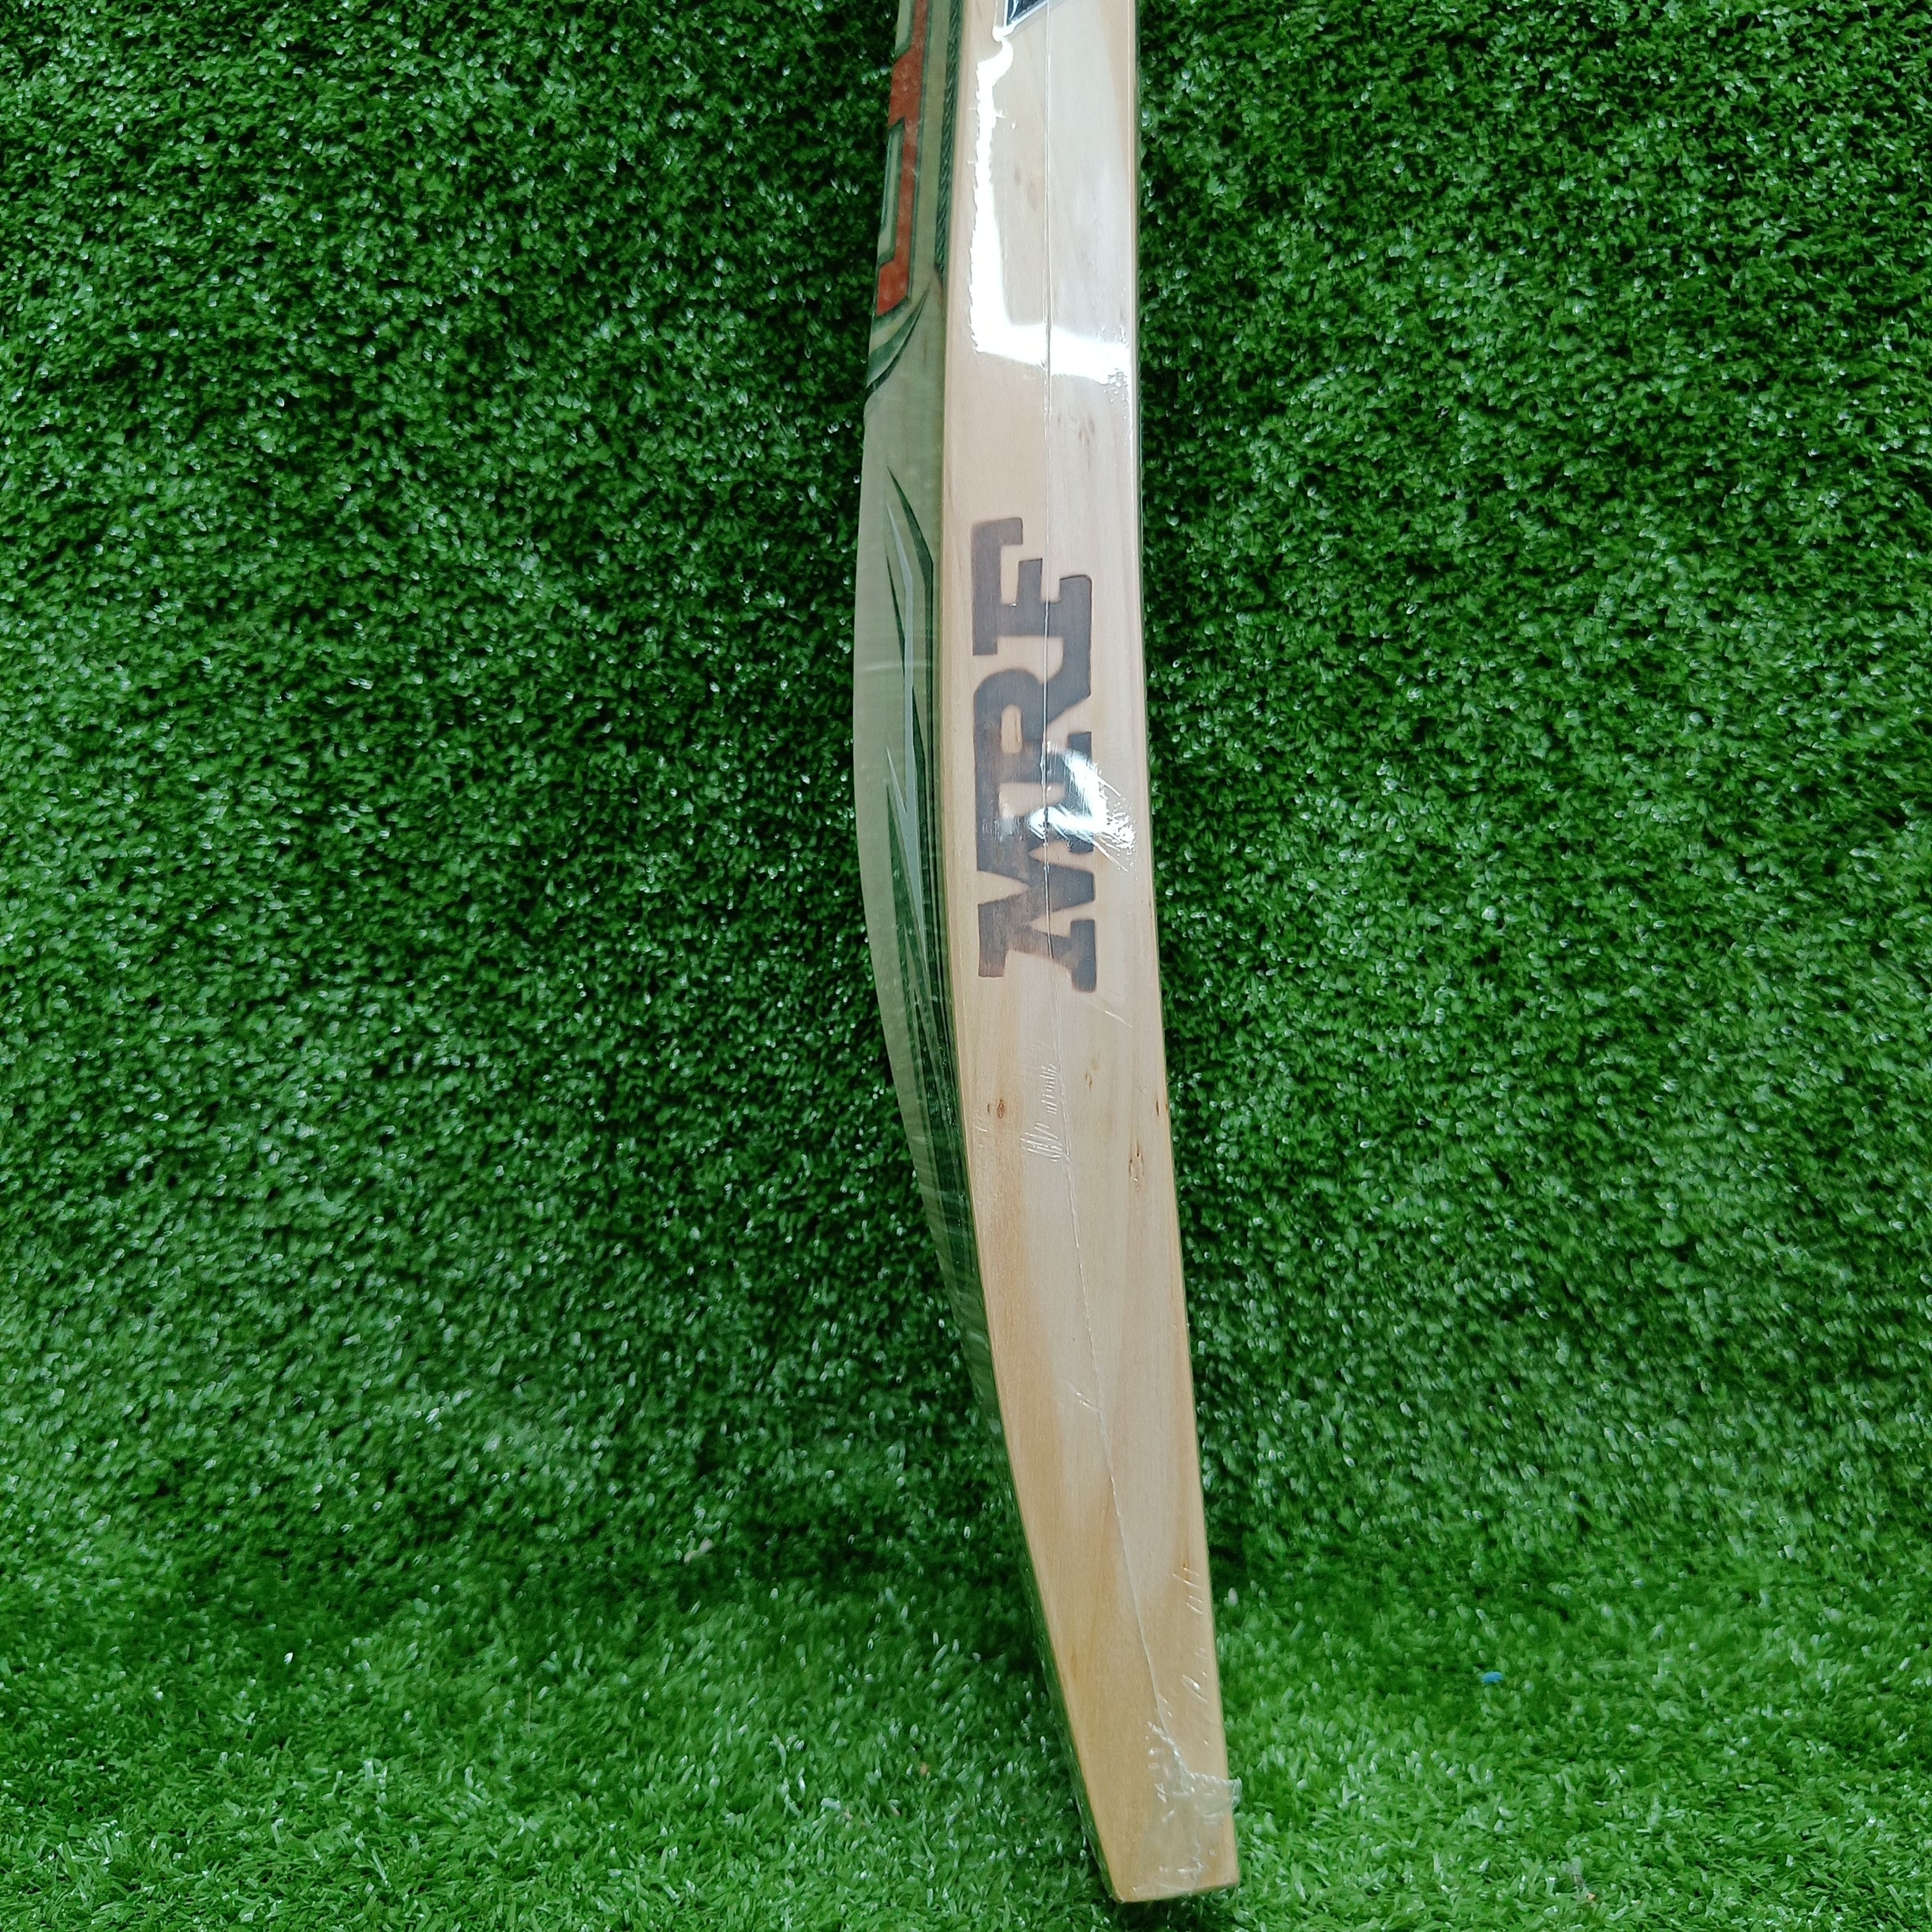 MRF Legend VK 18 200 Cricket Bat